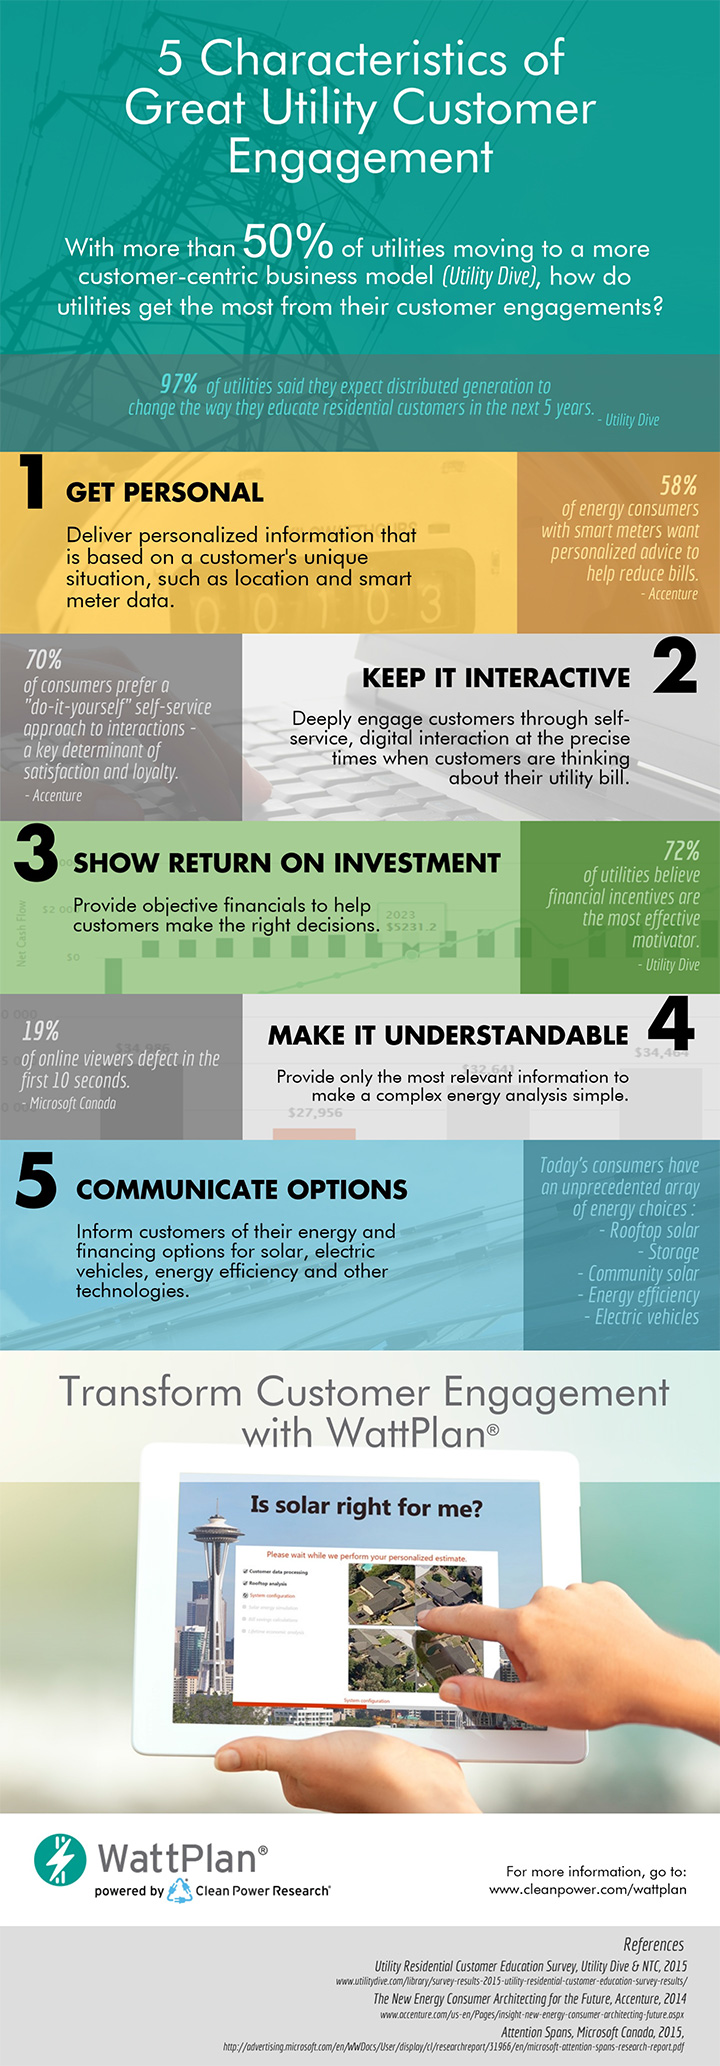 5 Characteristics of Great Utility Customer Engagement